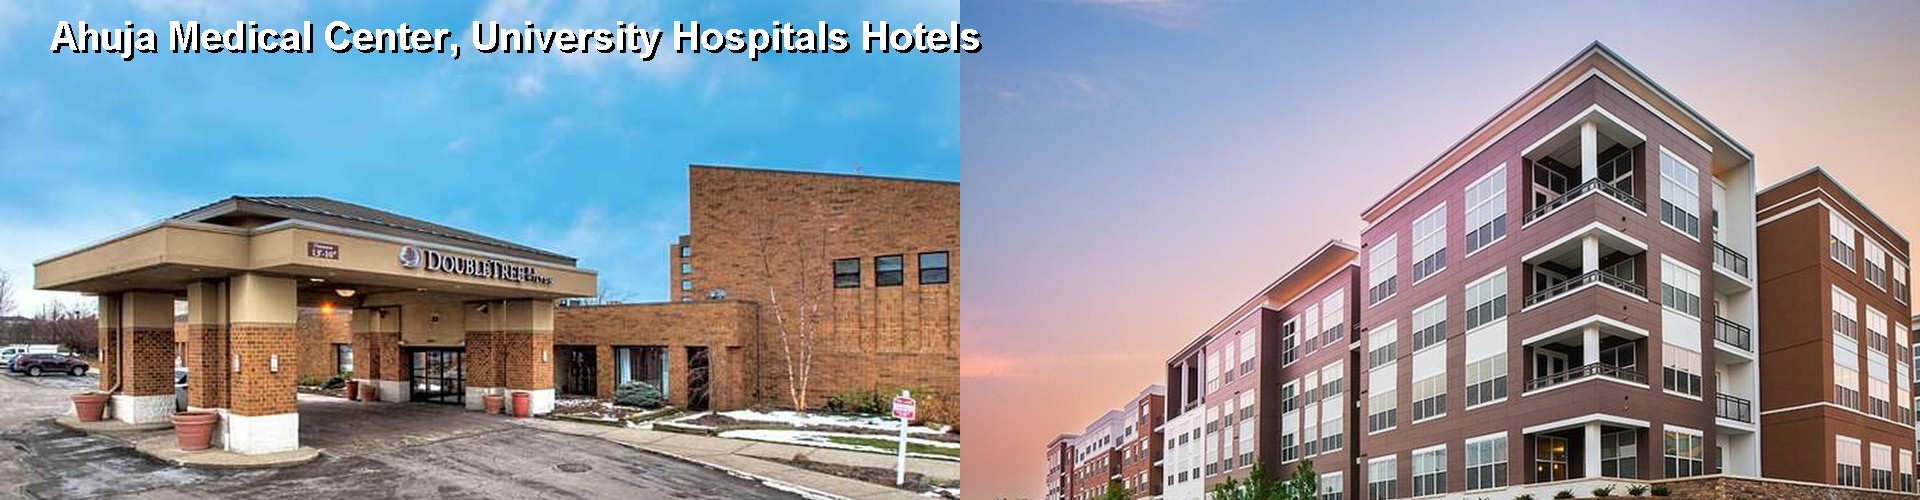 4 Best Hotels near Ahuja Medical Center, University Hospitals